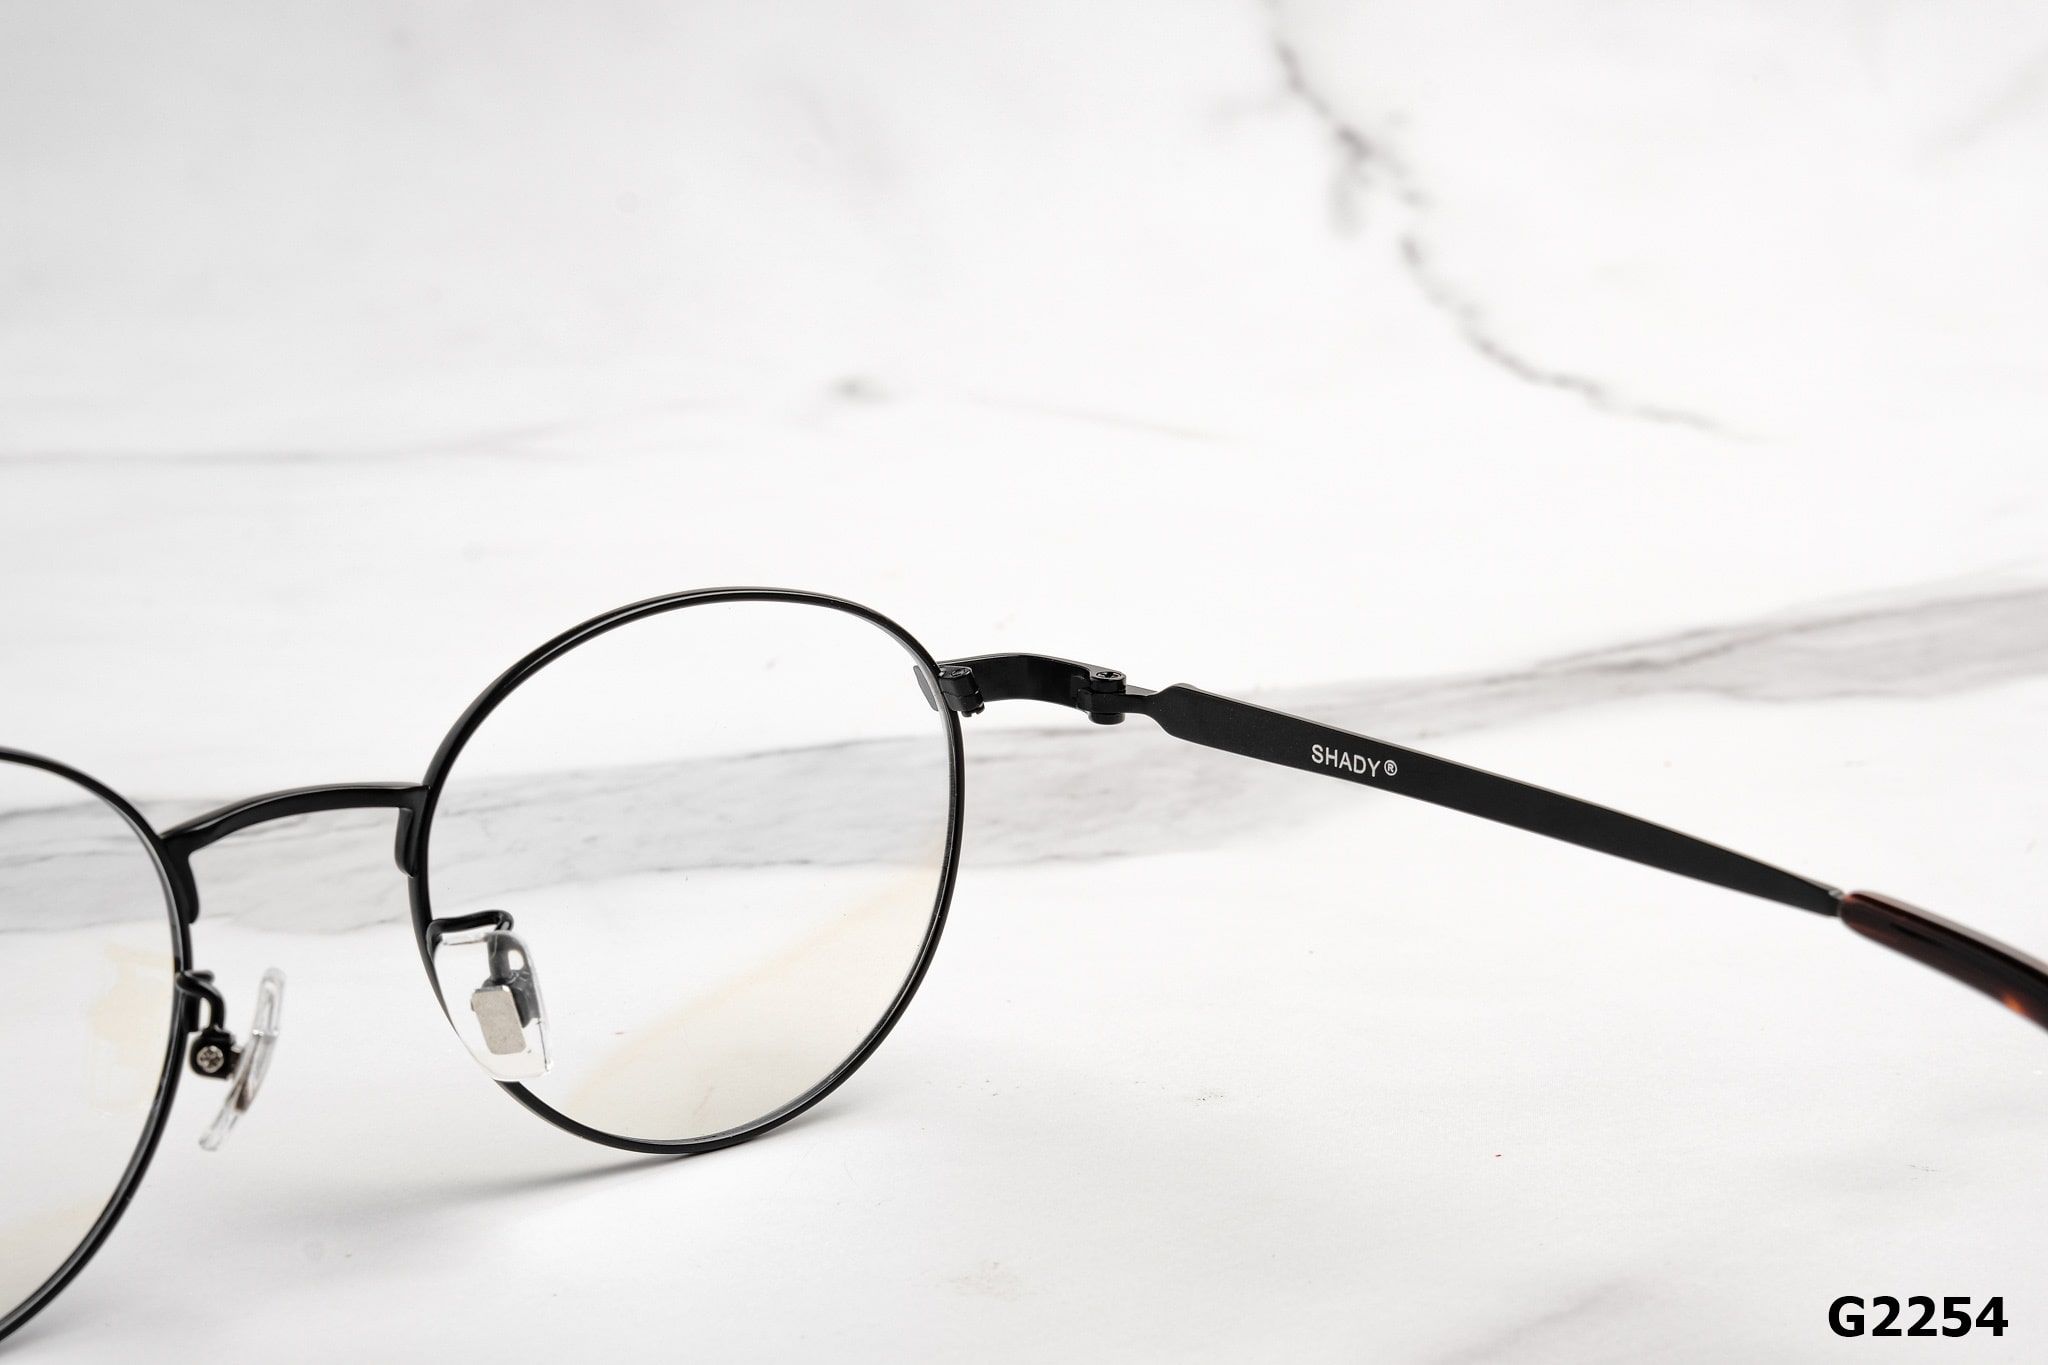  SHADY Eyewear - Glasses - G2254 